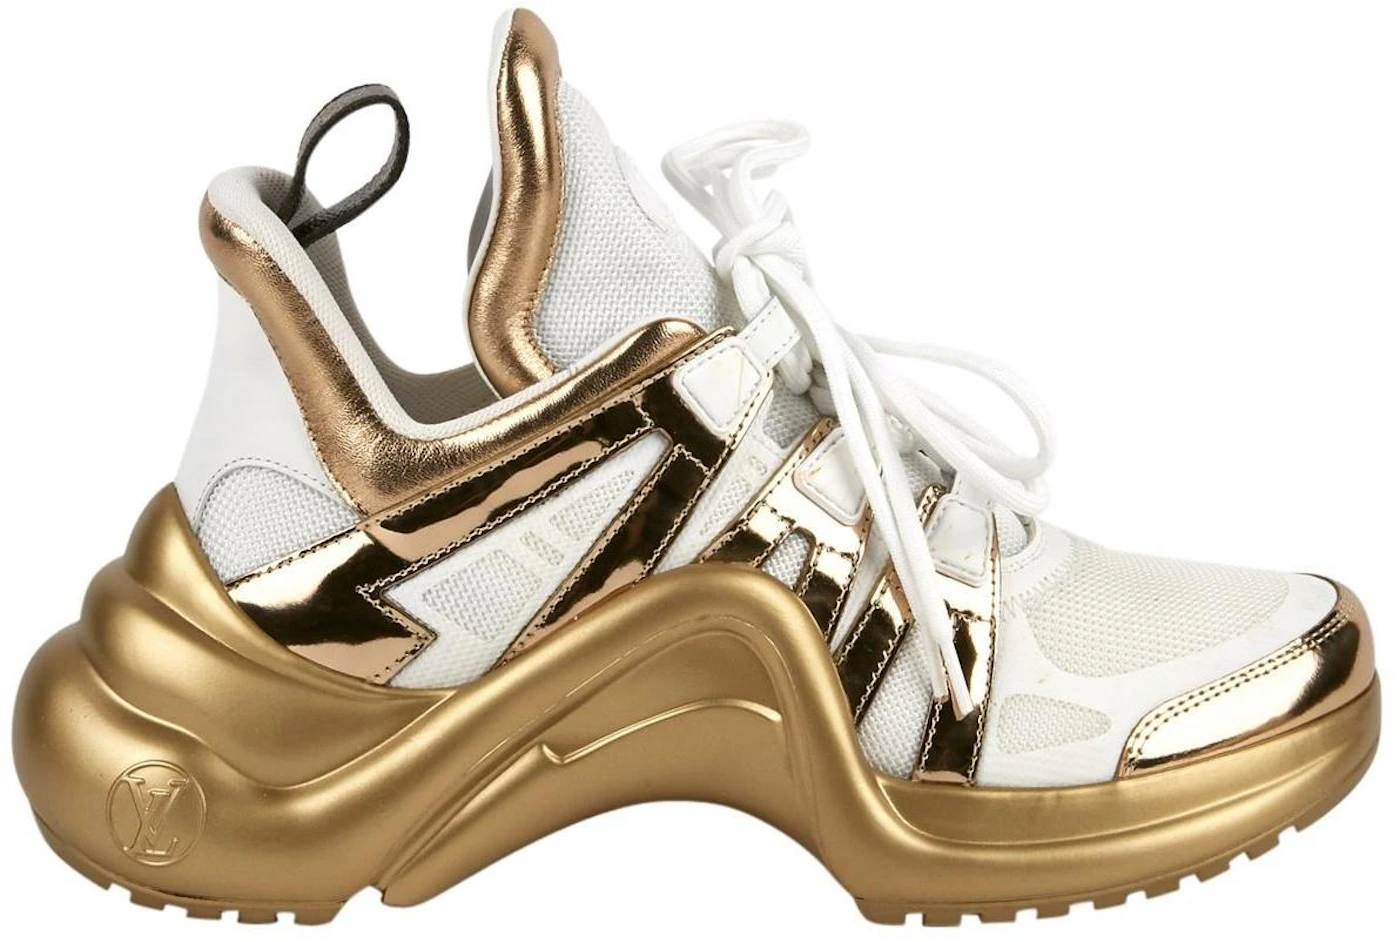 Louis Vuitton Arclight Trainer Gold (Women's) - 1A52J2 - US